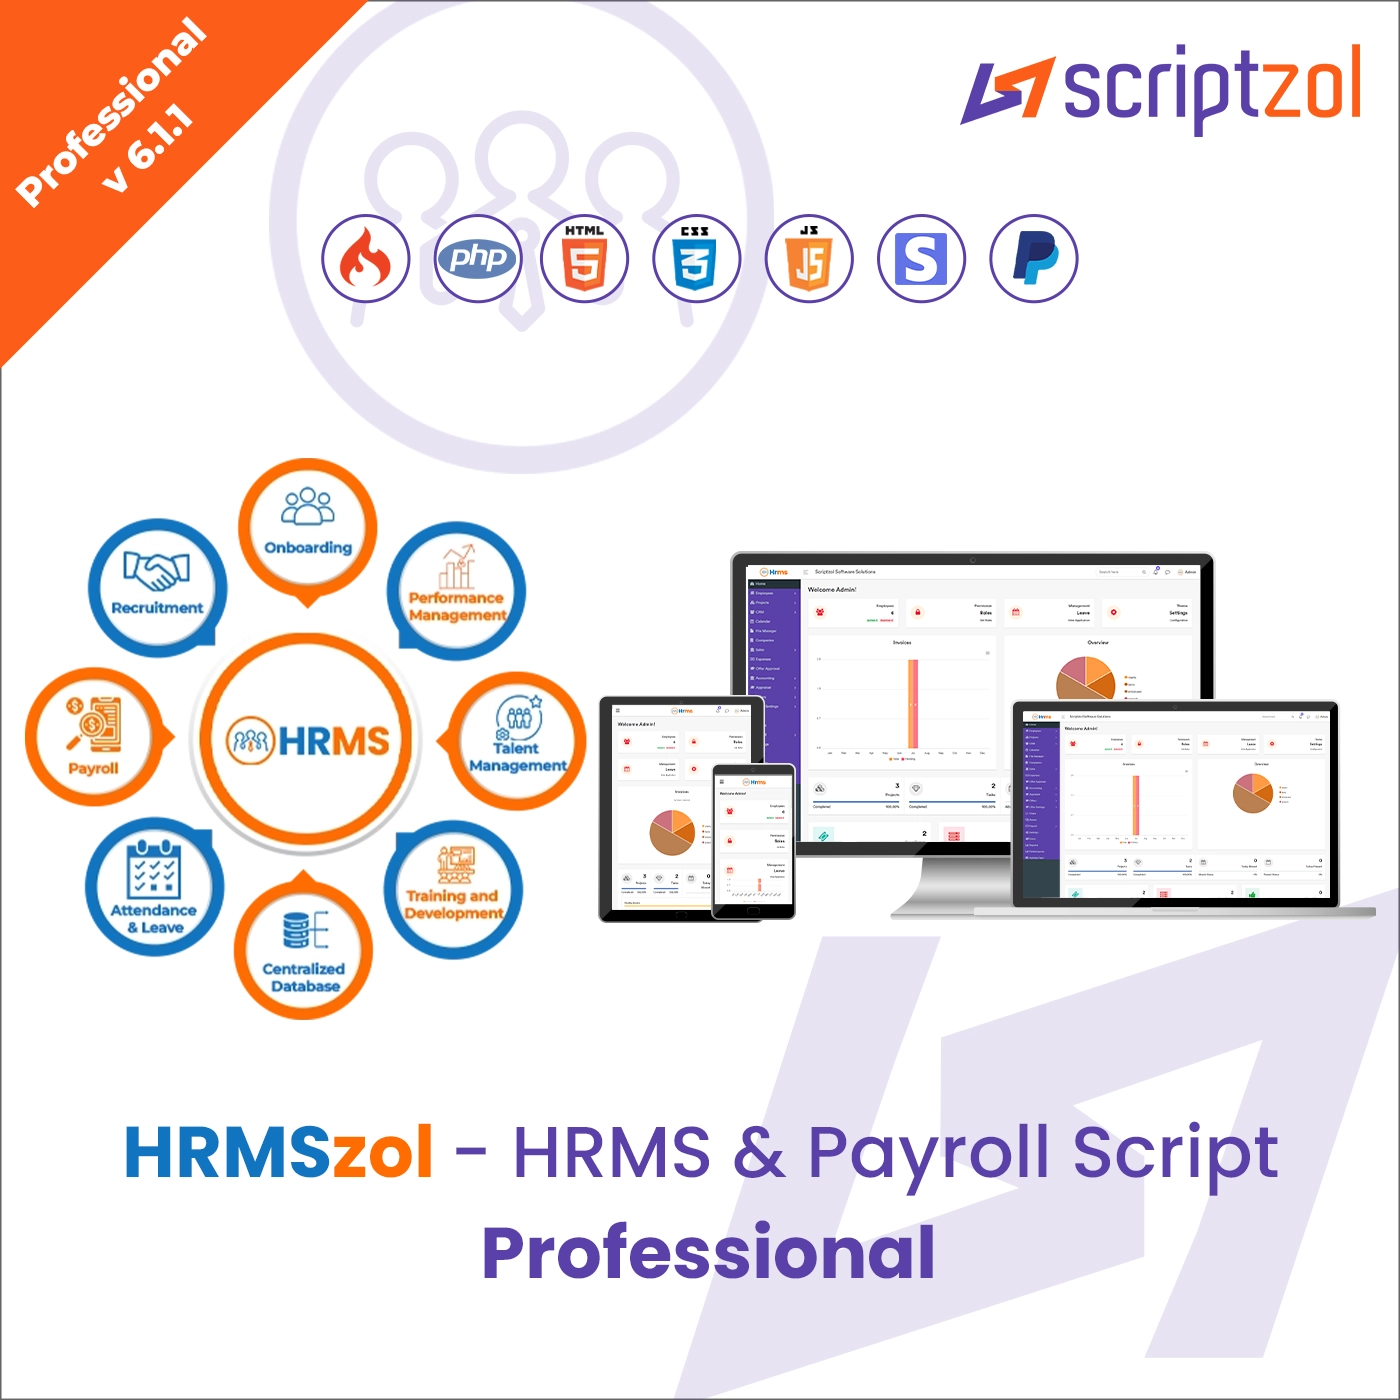 HRMSzol - HRMS & Payroll Script Professional